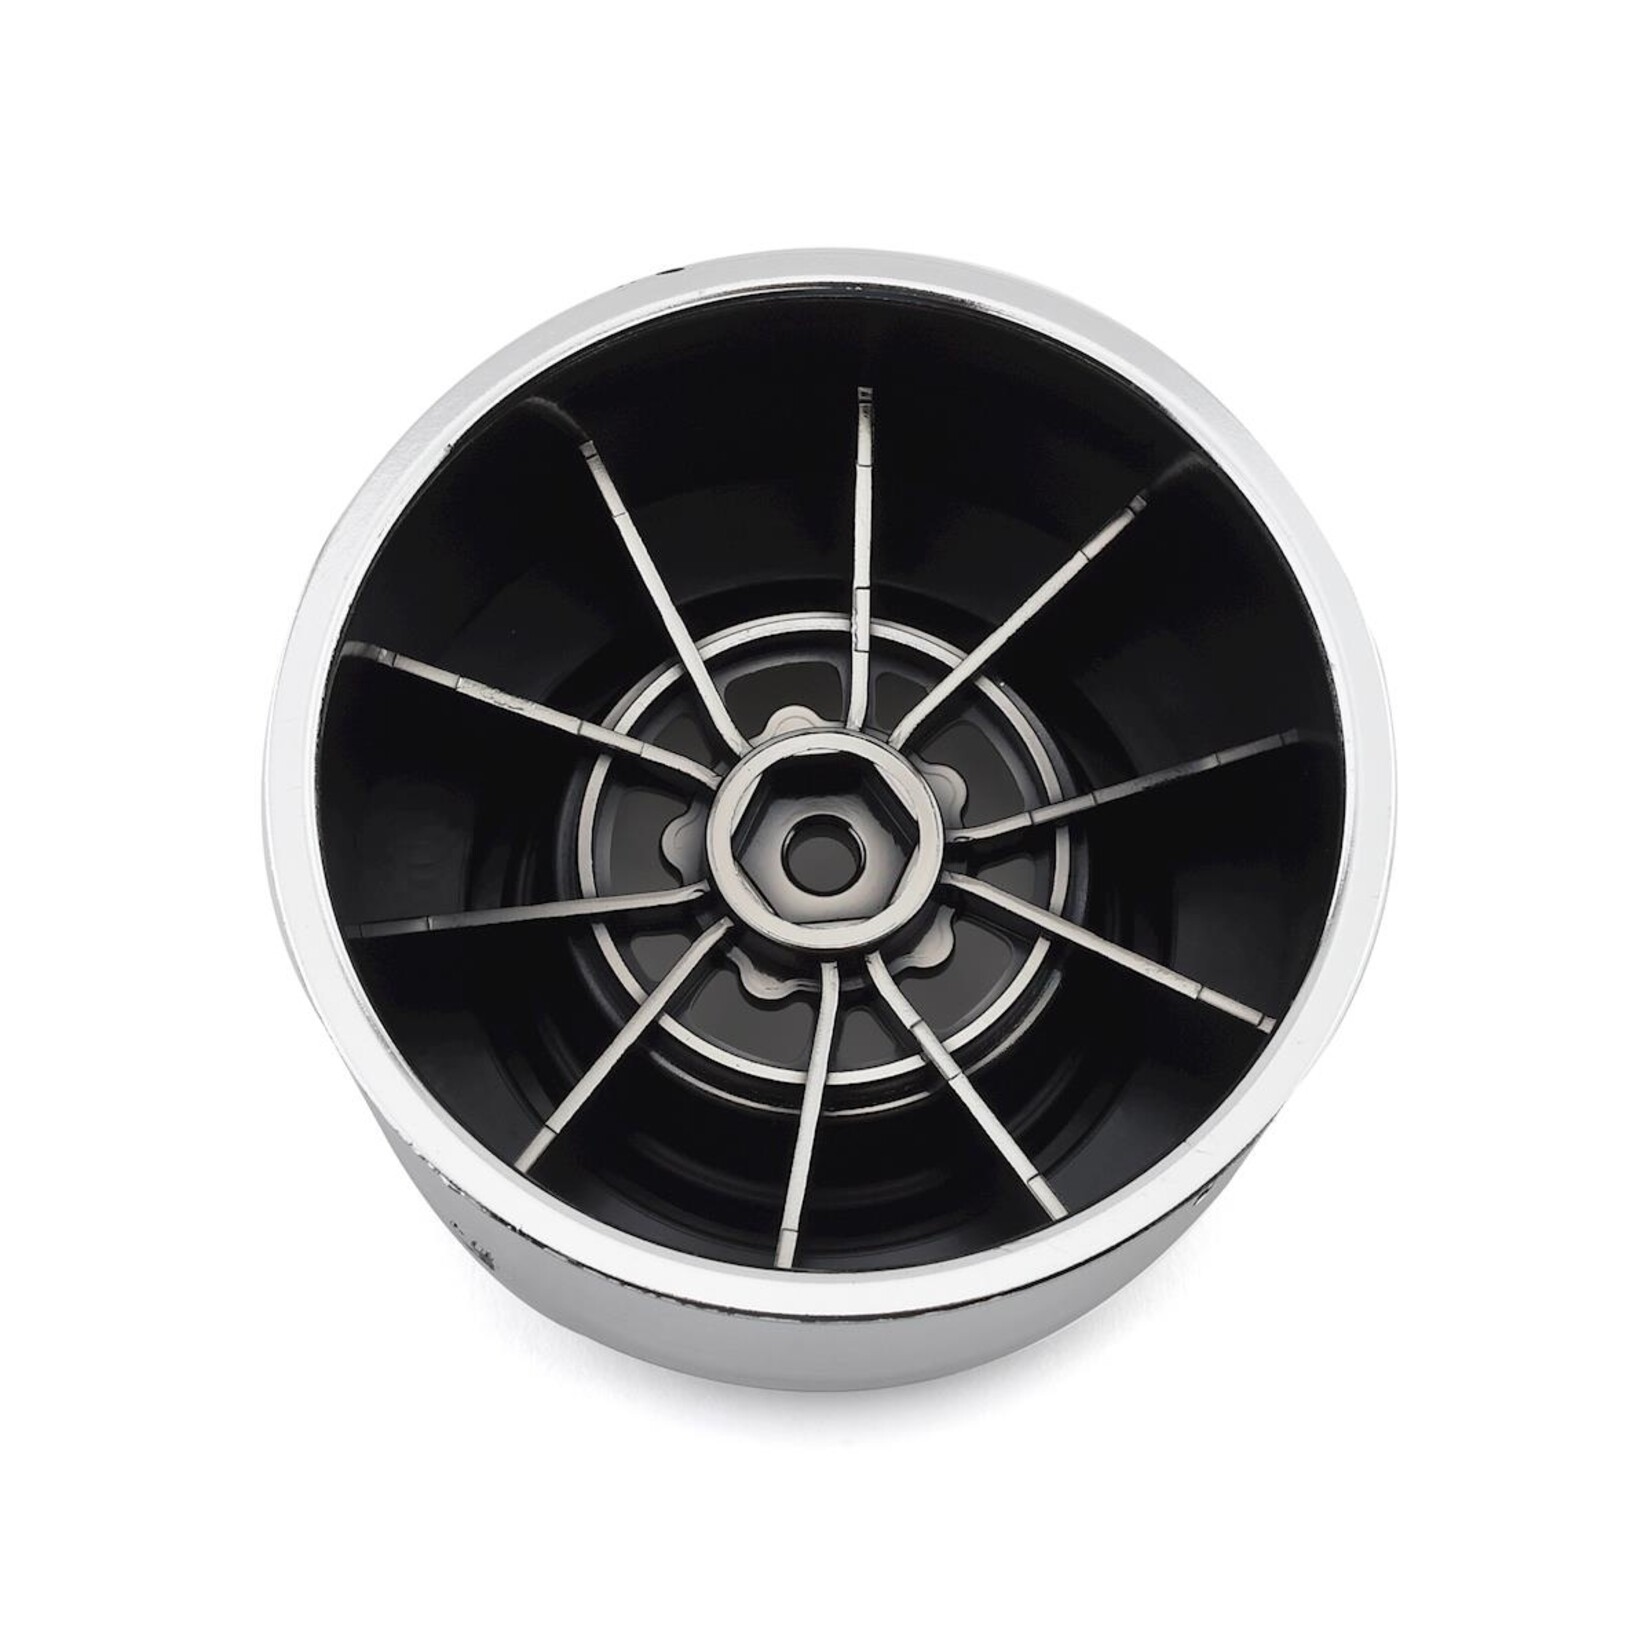 JConcepts JConcepts Tactic Street Eliminator Rear Drag Racing Wheels (2) (Chrome) w/12mm Hex #3400C